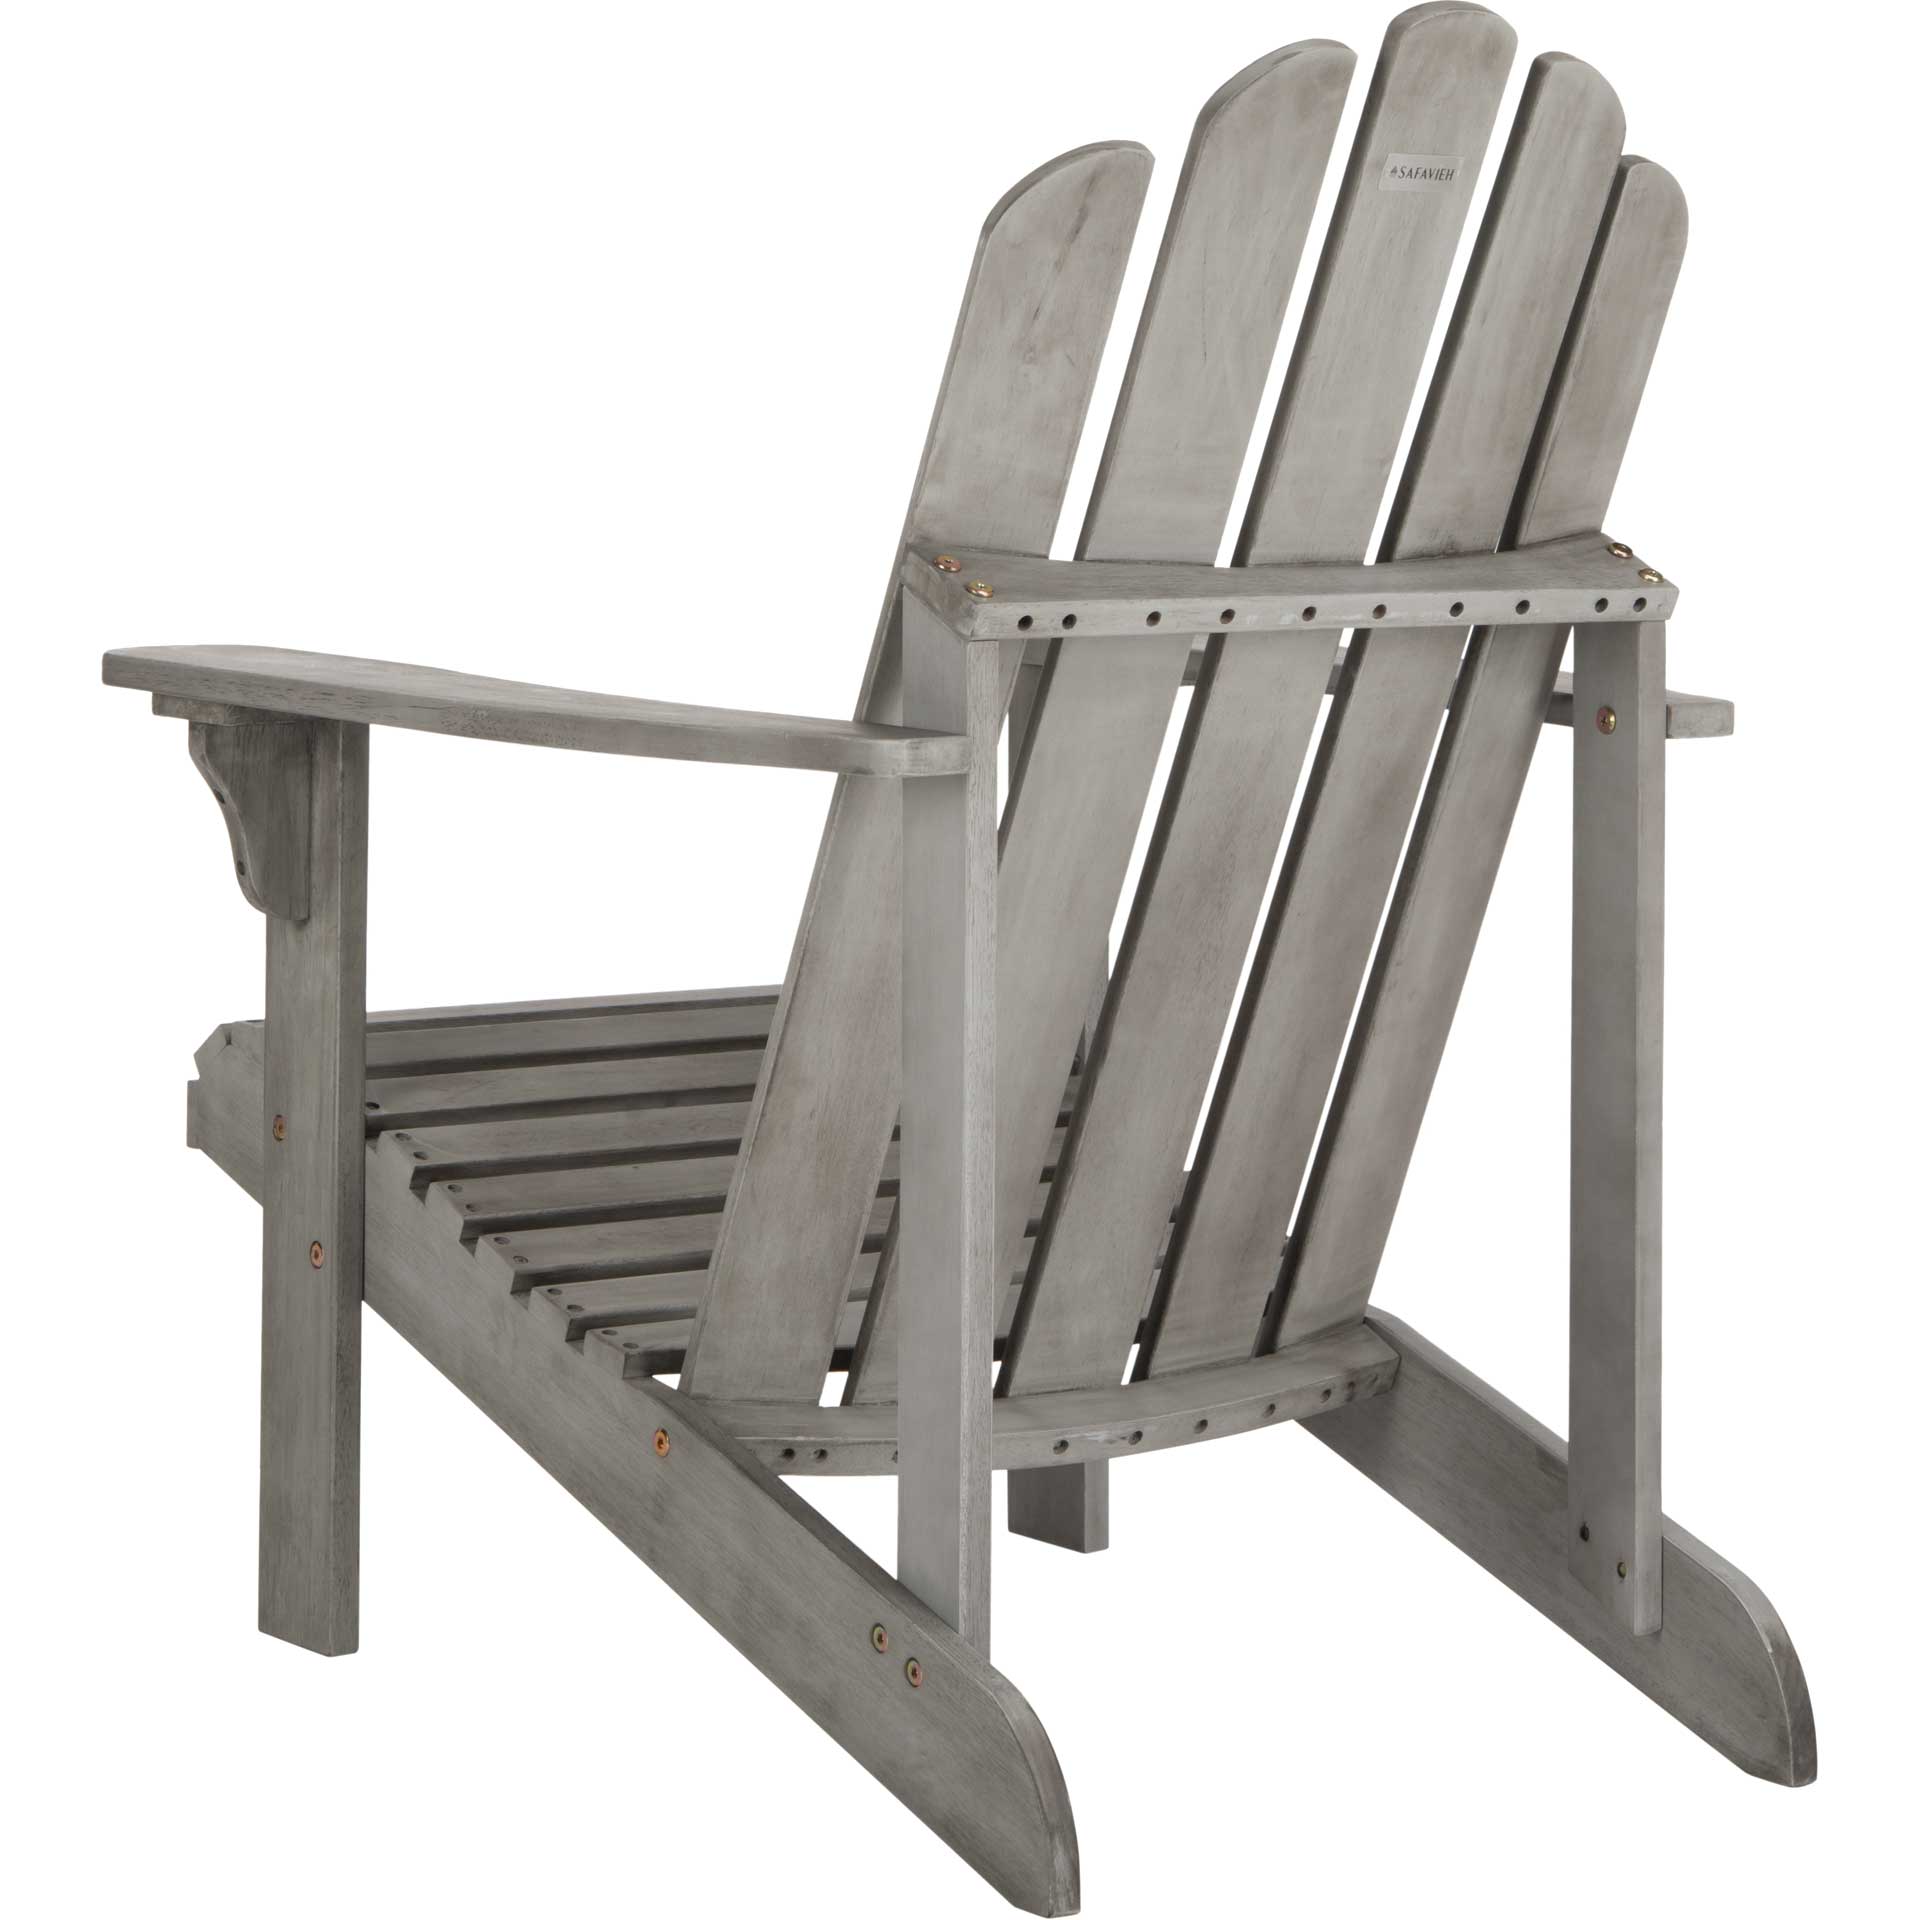 Torrance Adirondack Chair Gray Wash